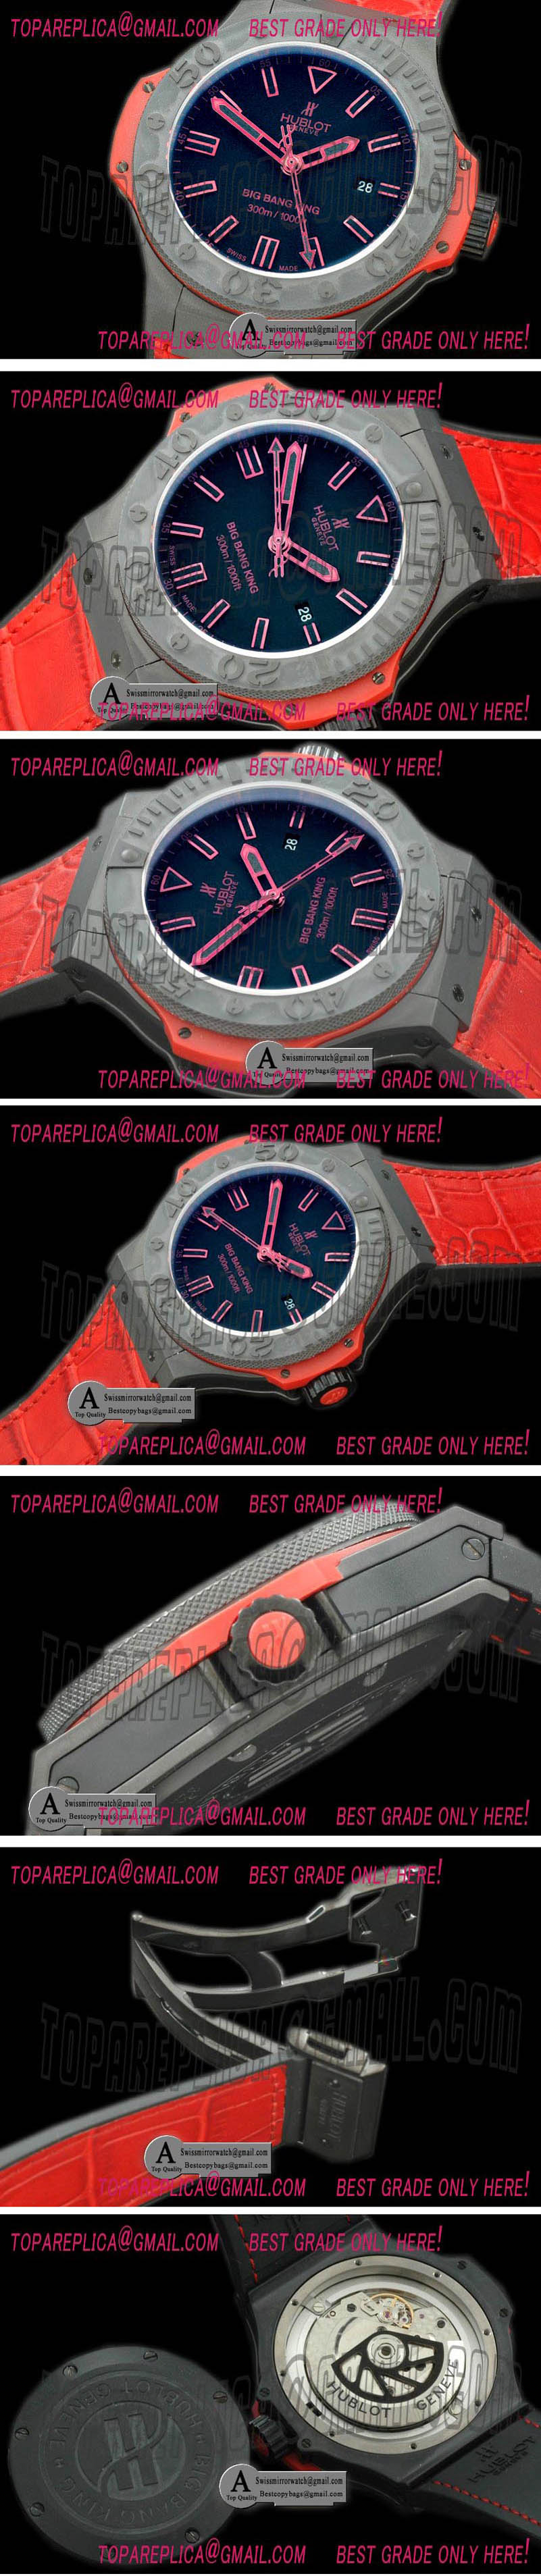 Hublot 322.CI.1130.GR.ABR10 Big Bang King All Black Red Ceramic/Rubber A-7750 Replica Watches